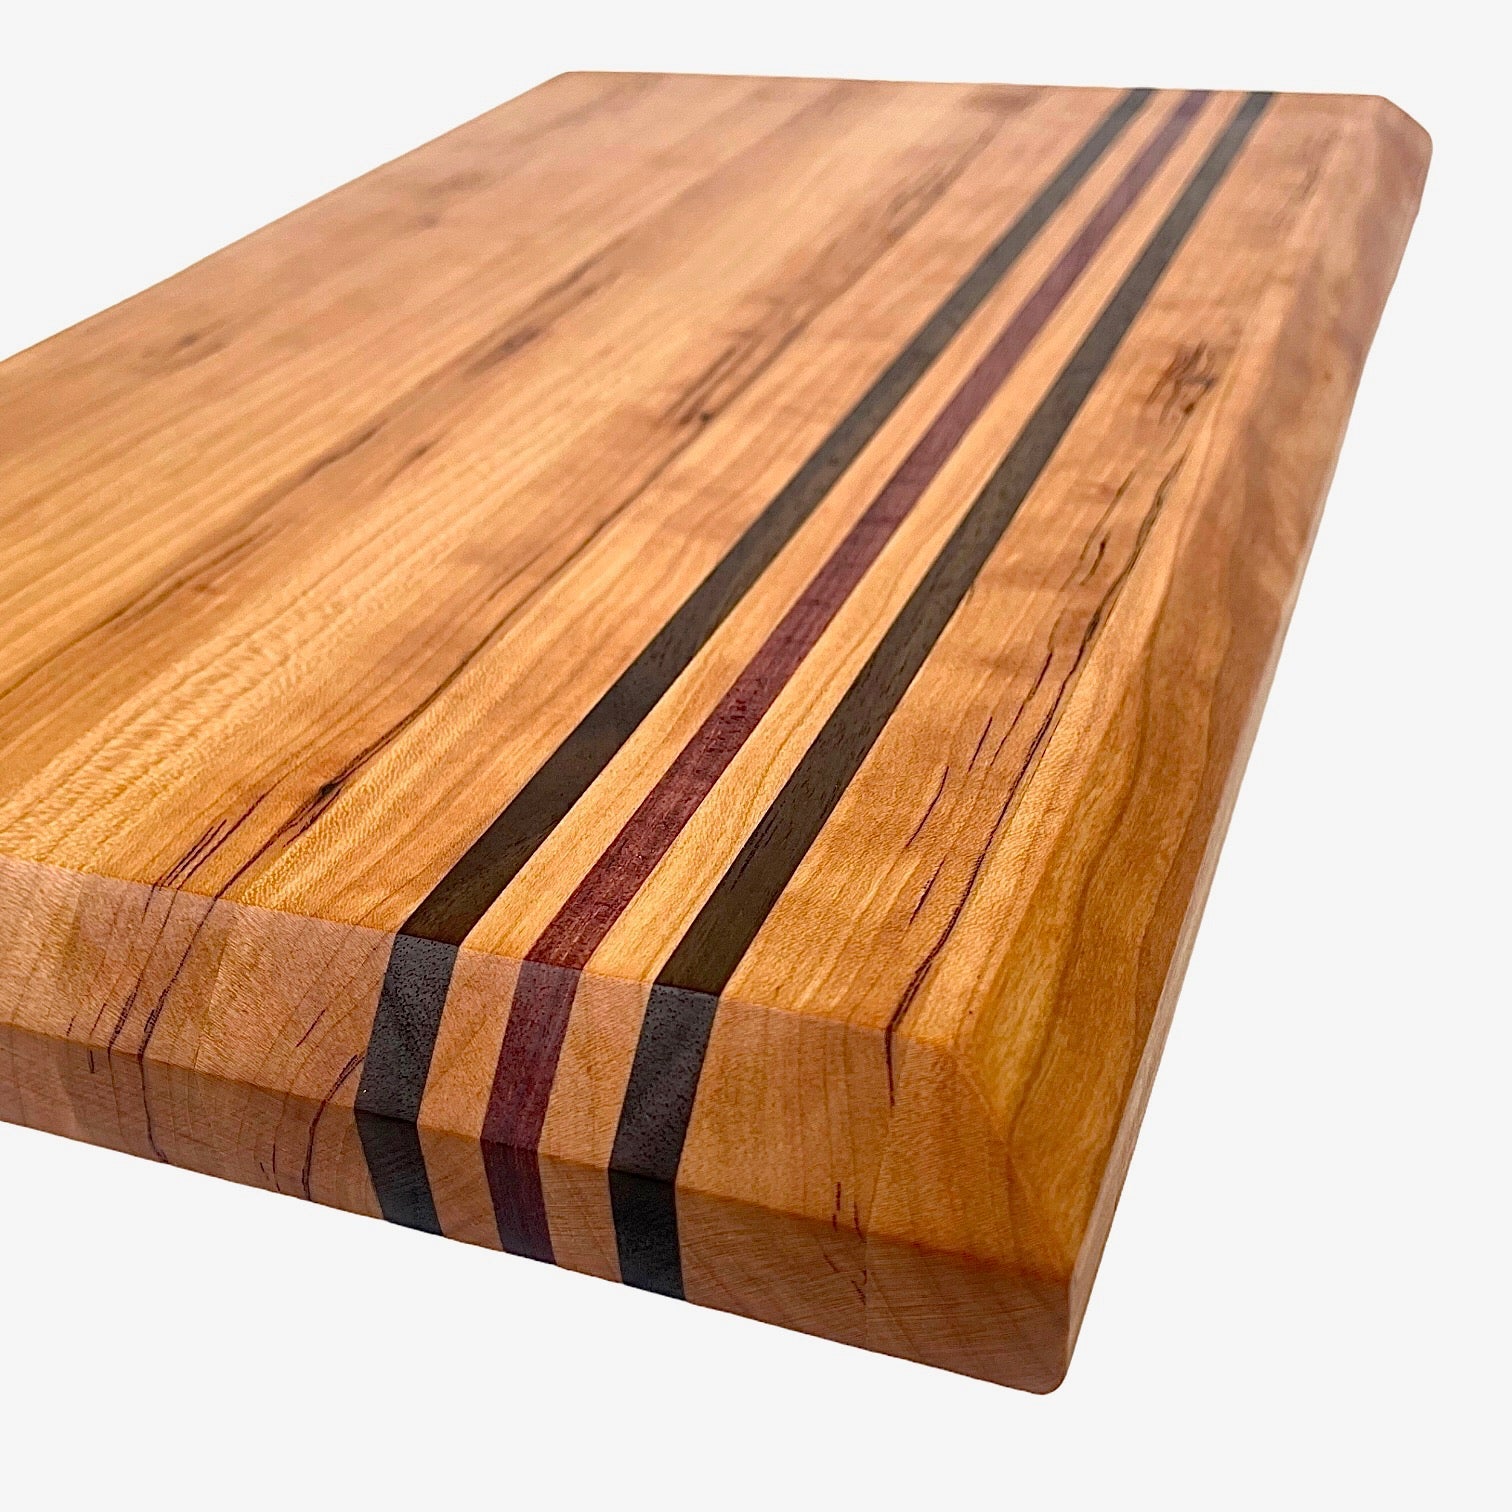 Hardwood Walnut Cutting Board - Zion